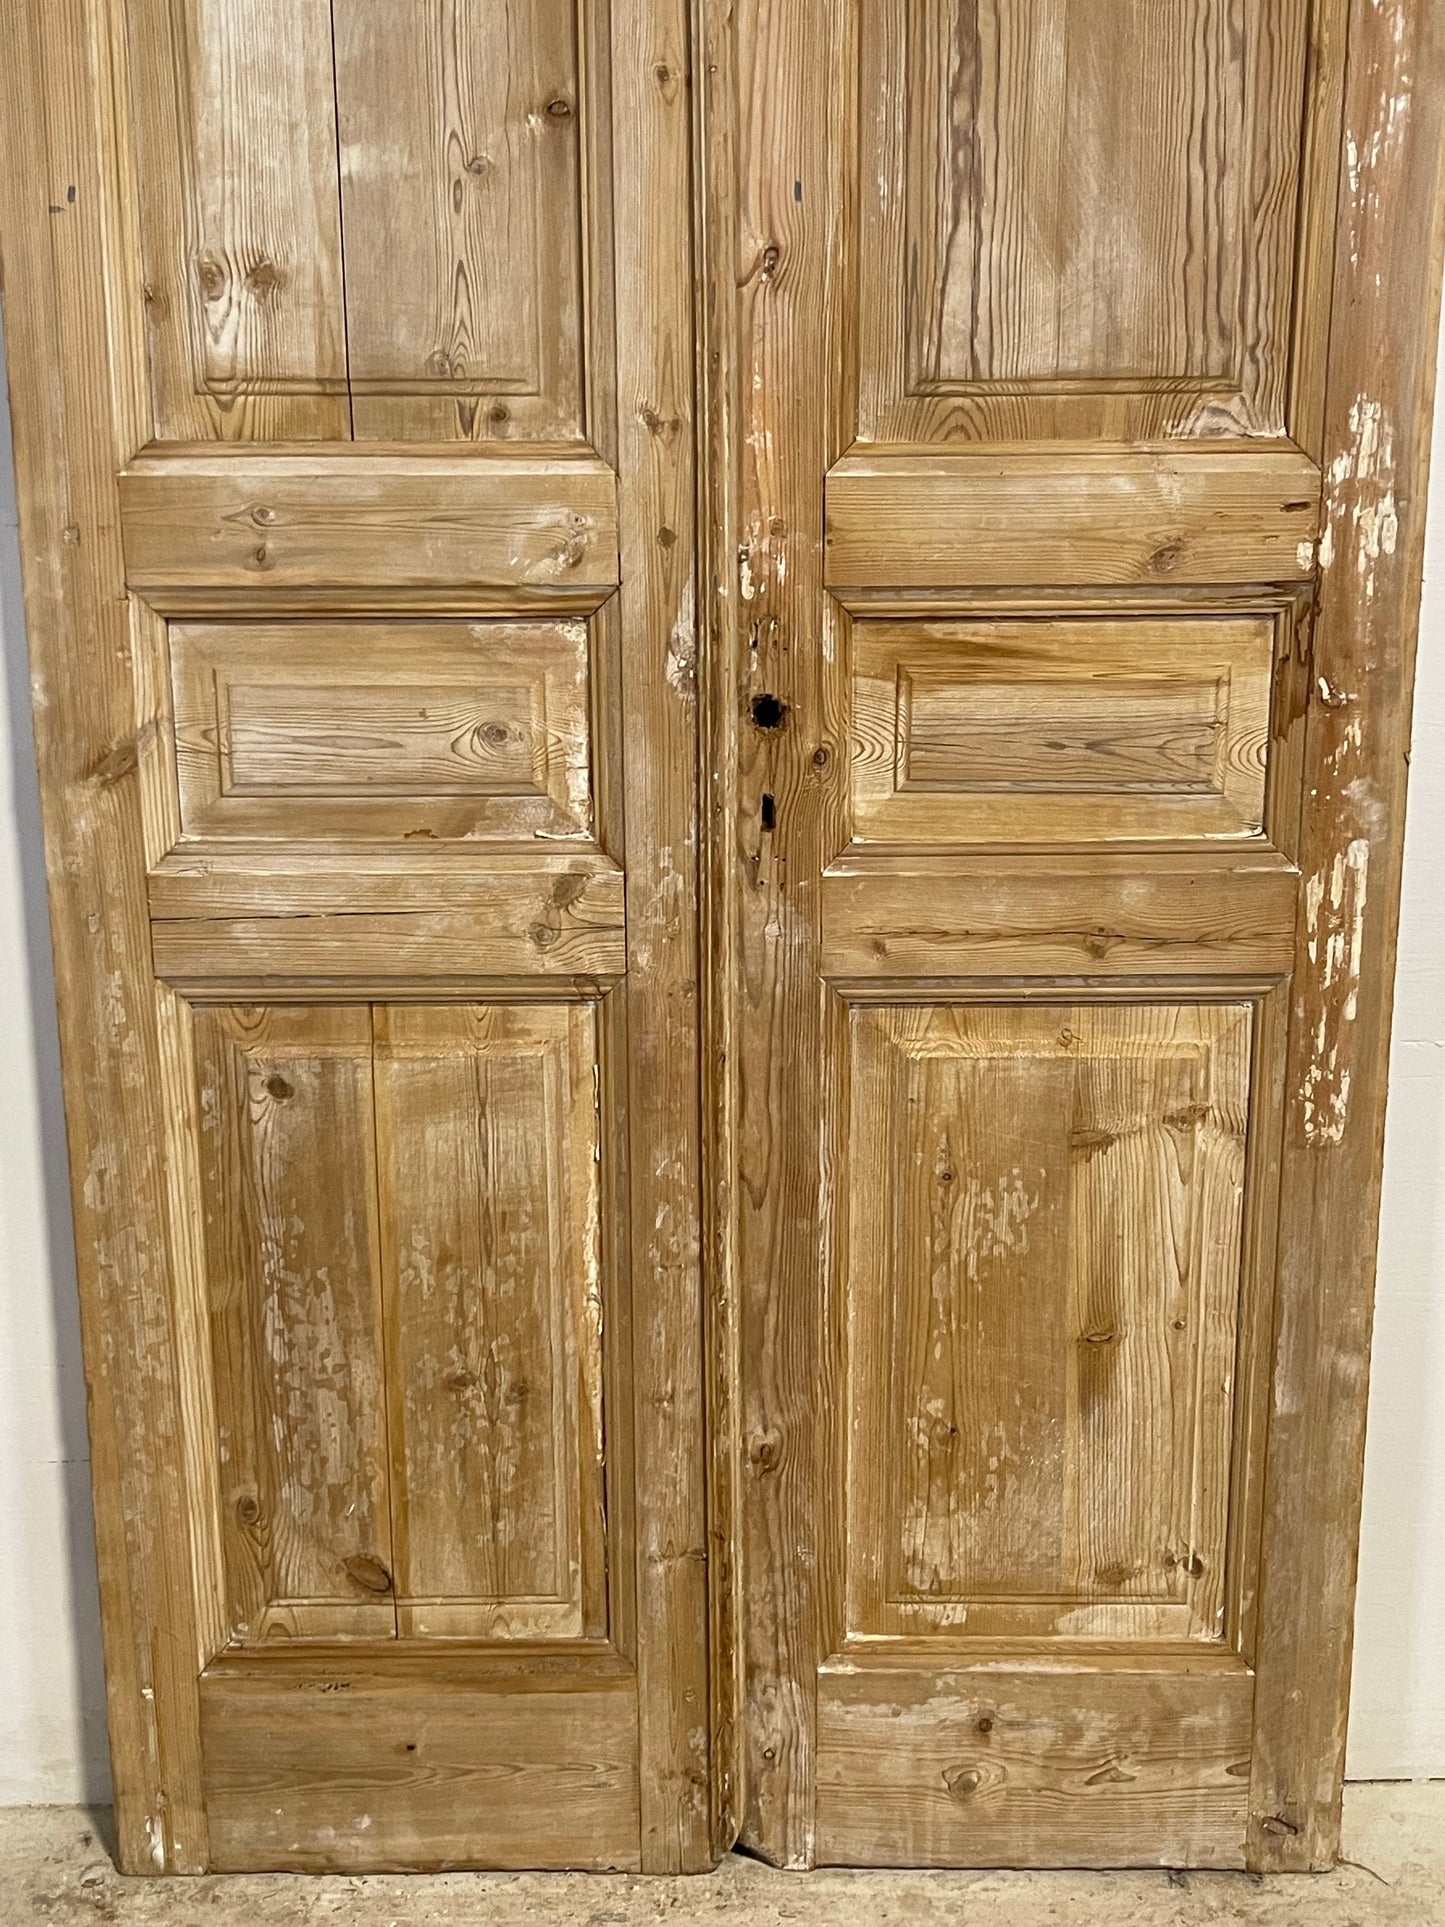 Antique French panel Doors (96x43) L287